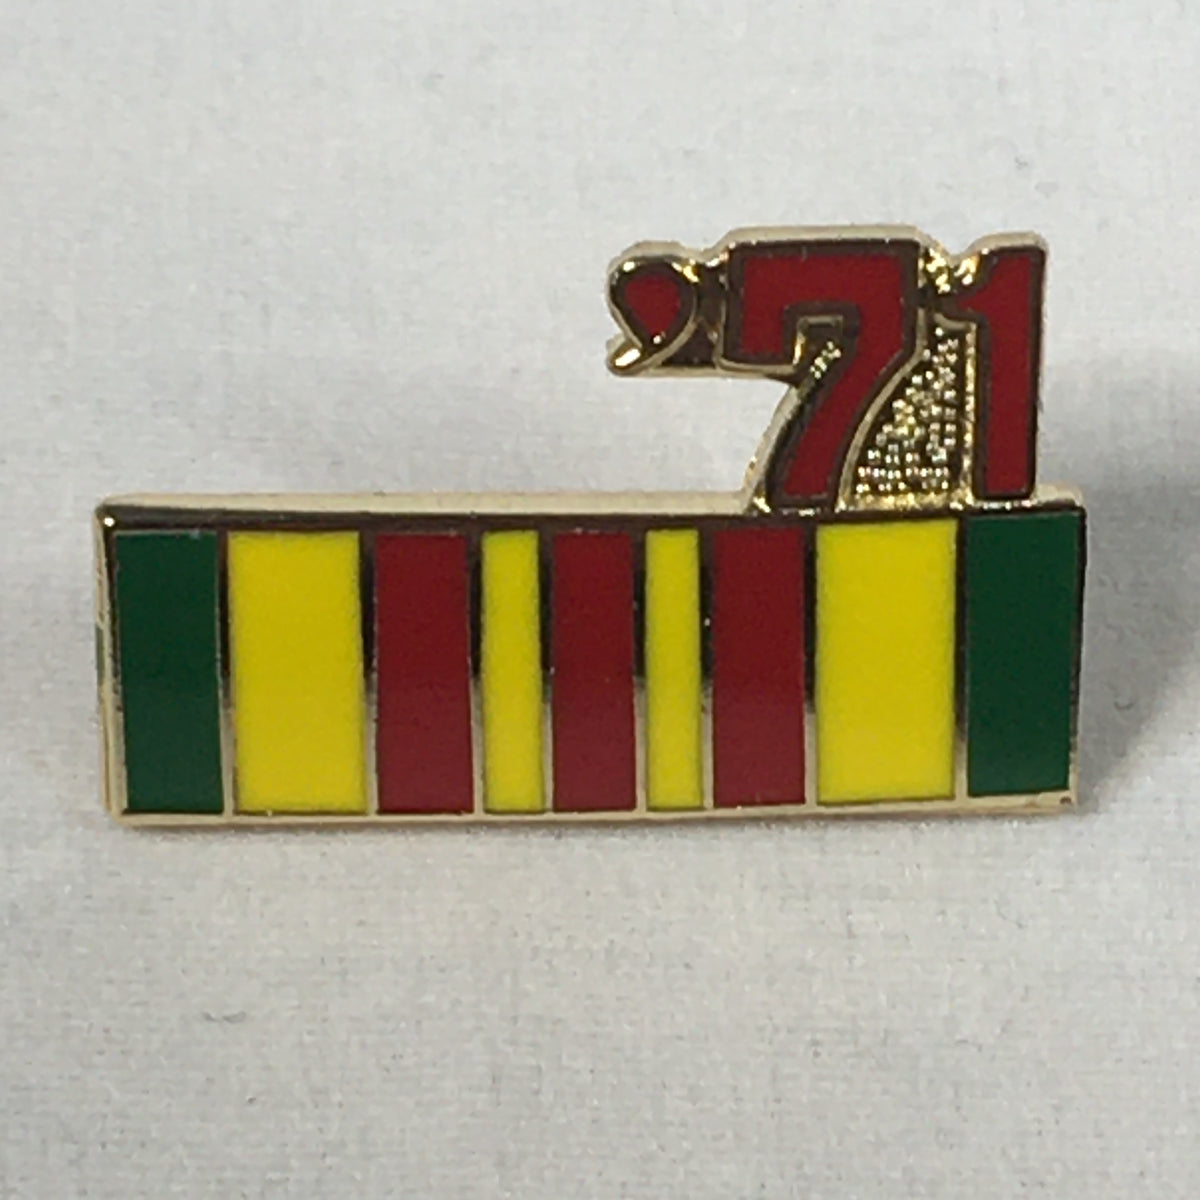 Vietnam Veteran Years of Service Pins